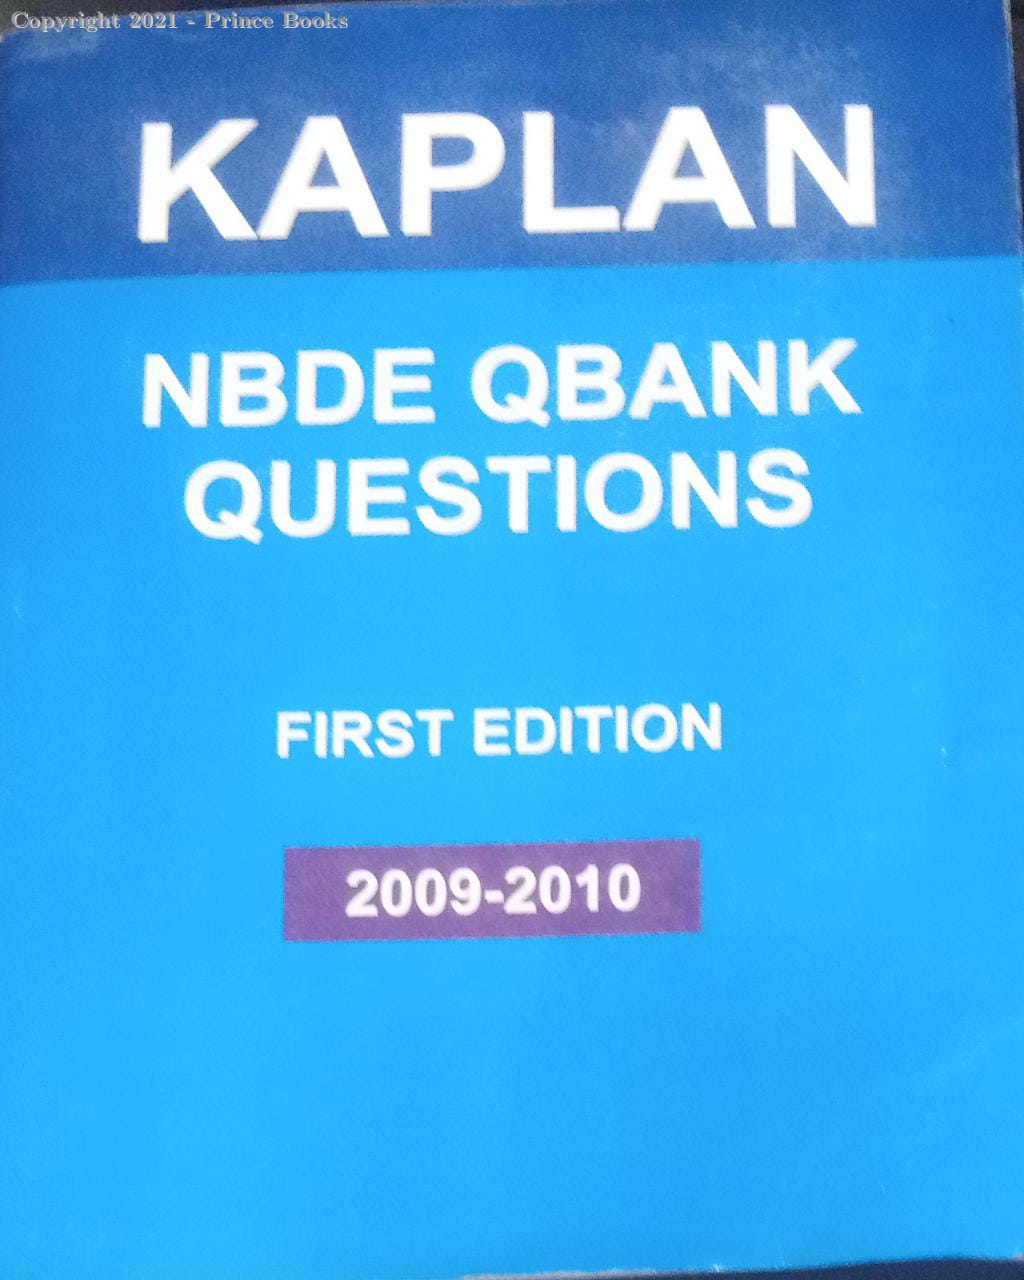 KAPLAN NBDE QBANK QUESTIONS